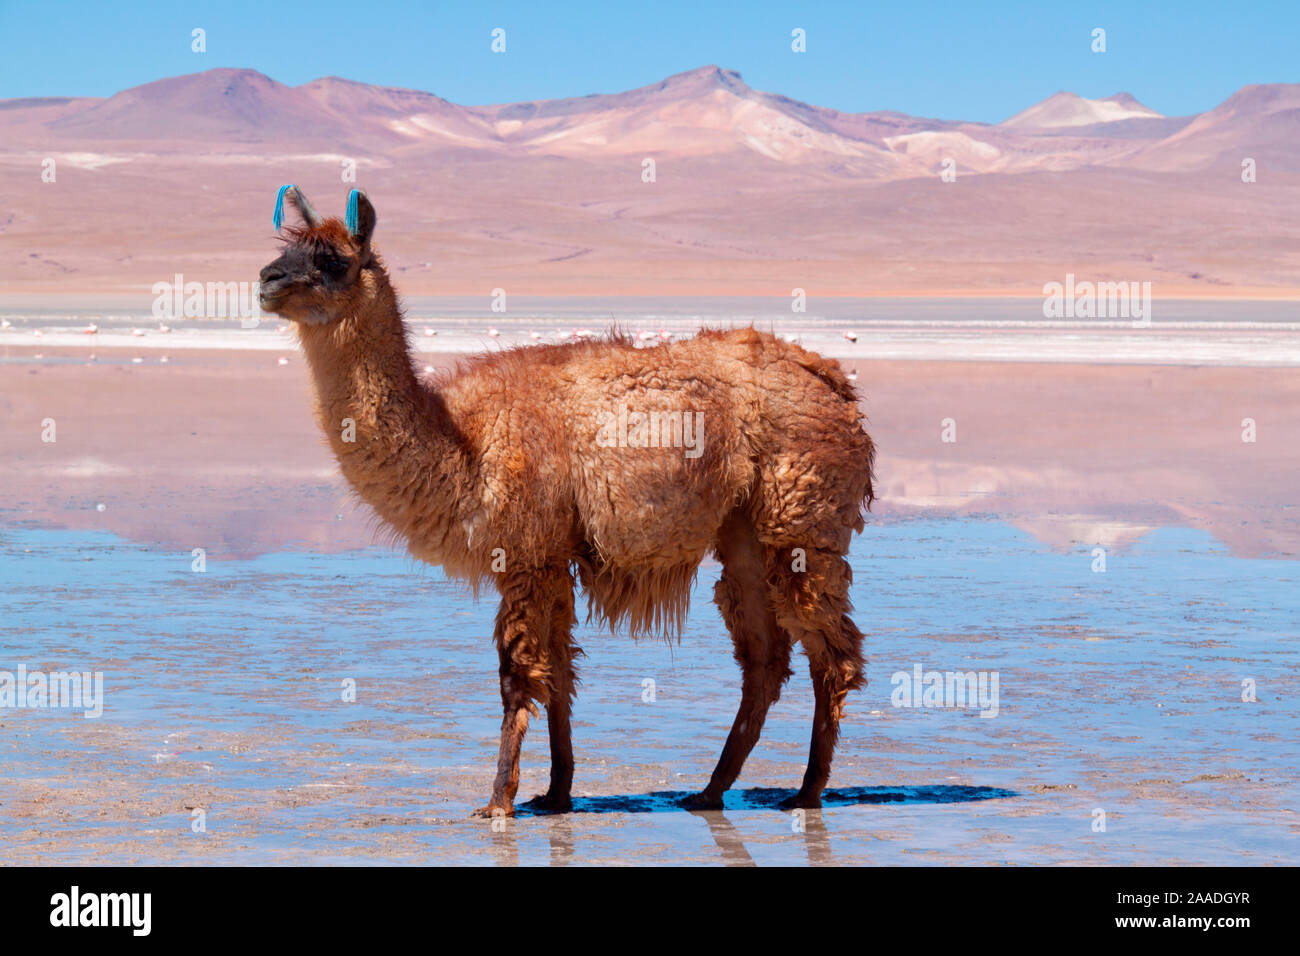 Llama standing in mud at the edge of Laguna Colorada, Bolivia. Stock Photo